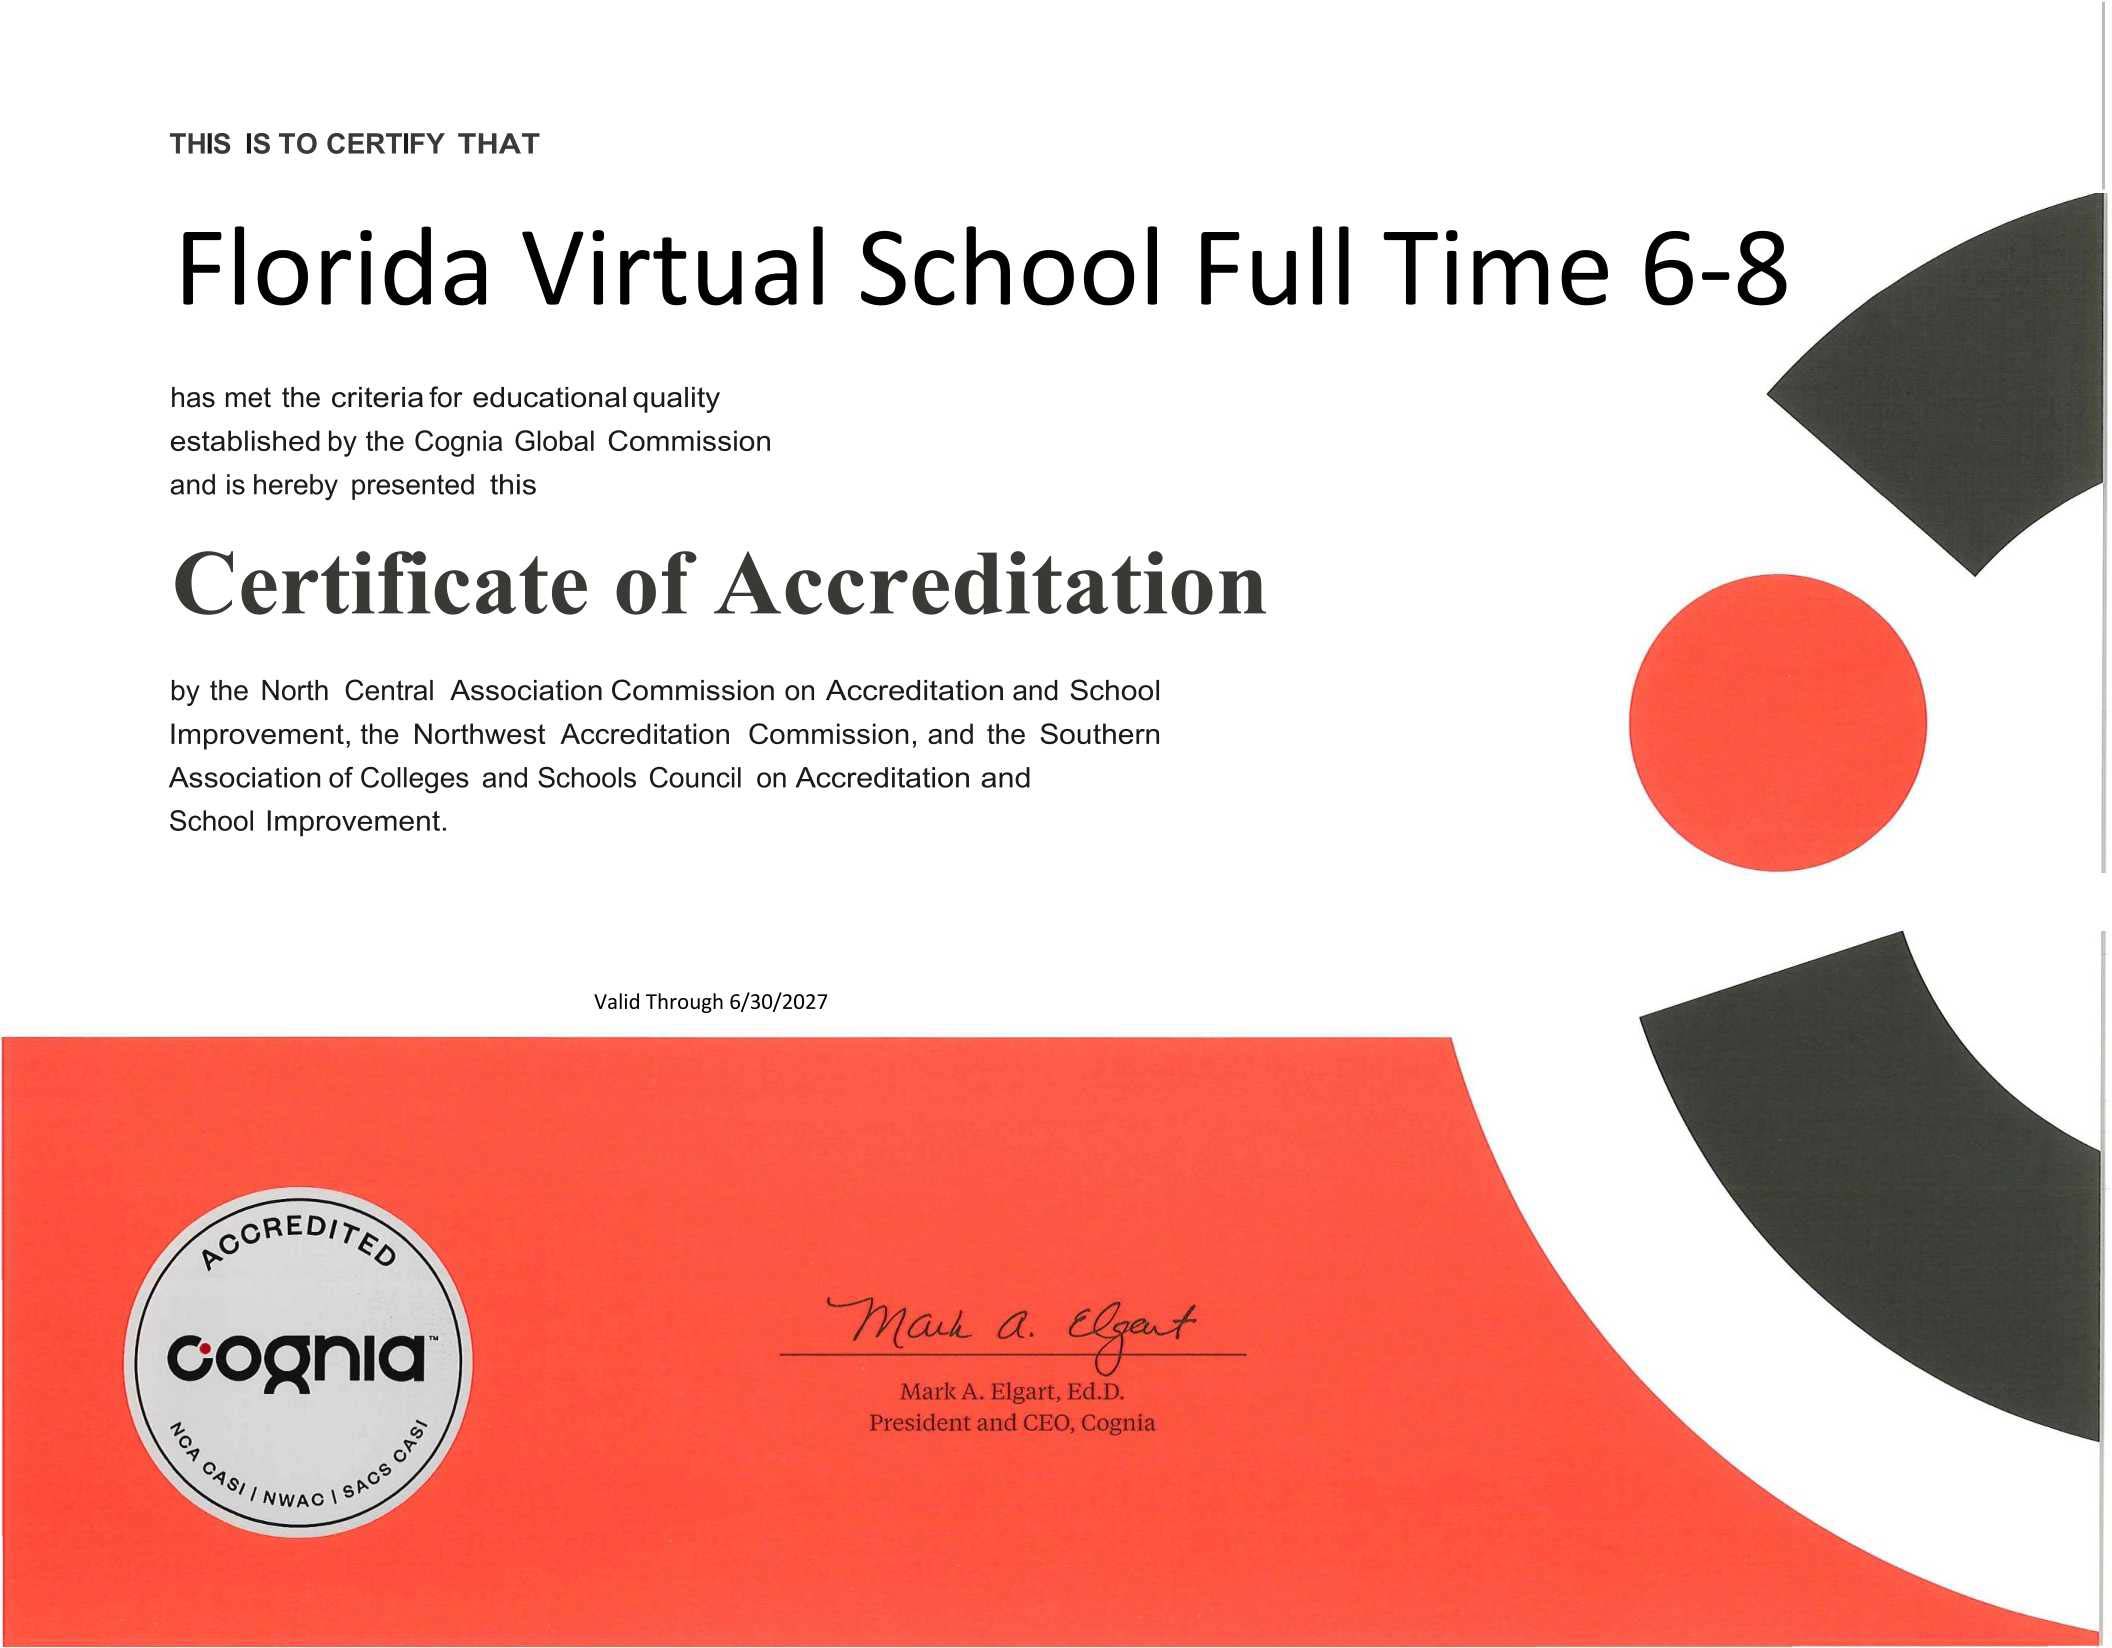 Florida Virtual School Full Time 6-8 Certificate of Accreditation